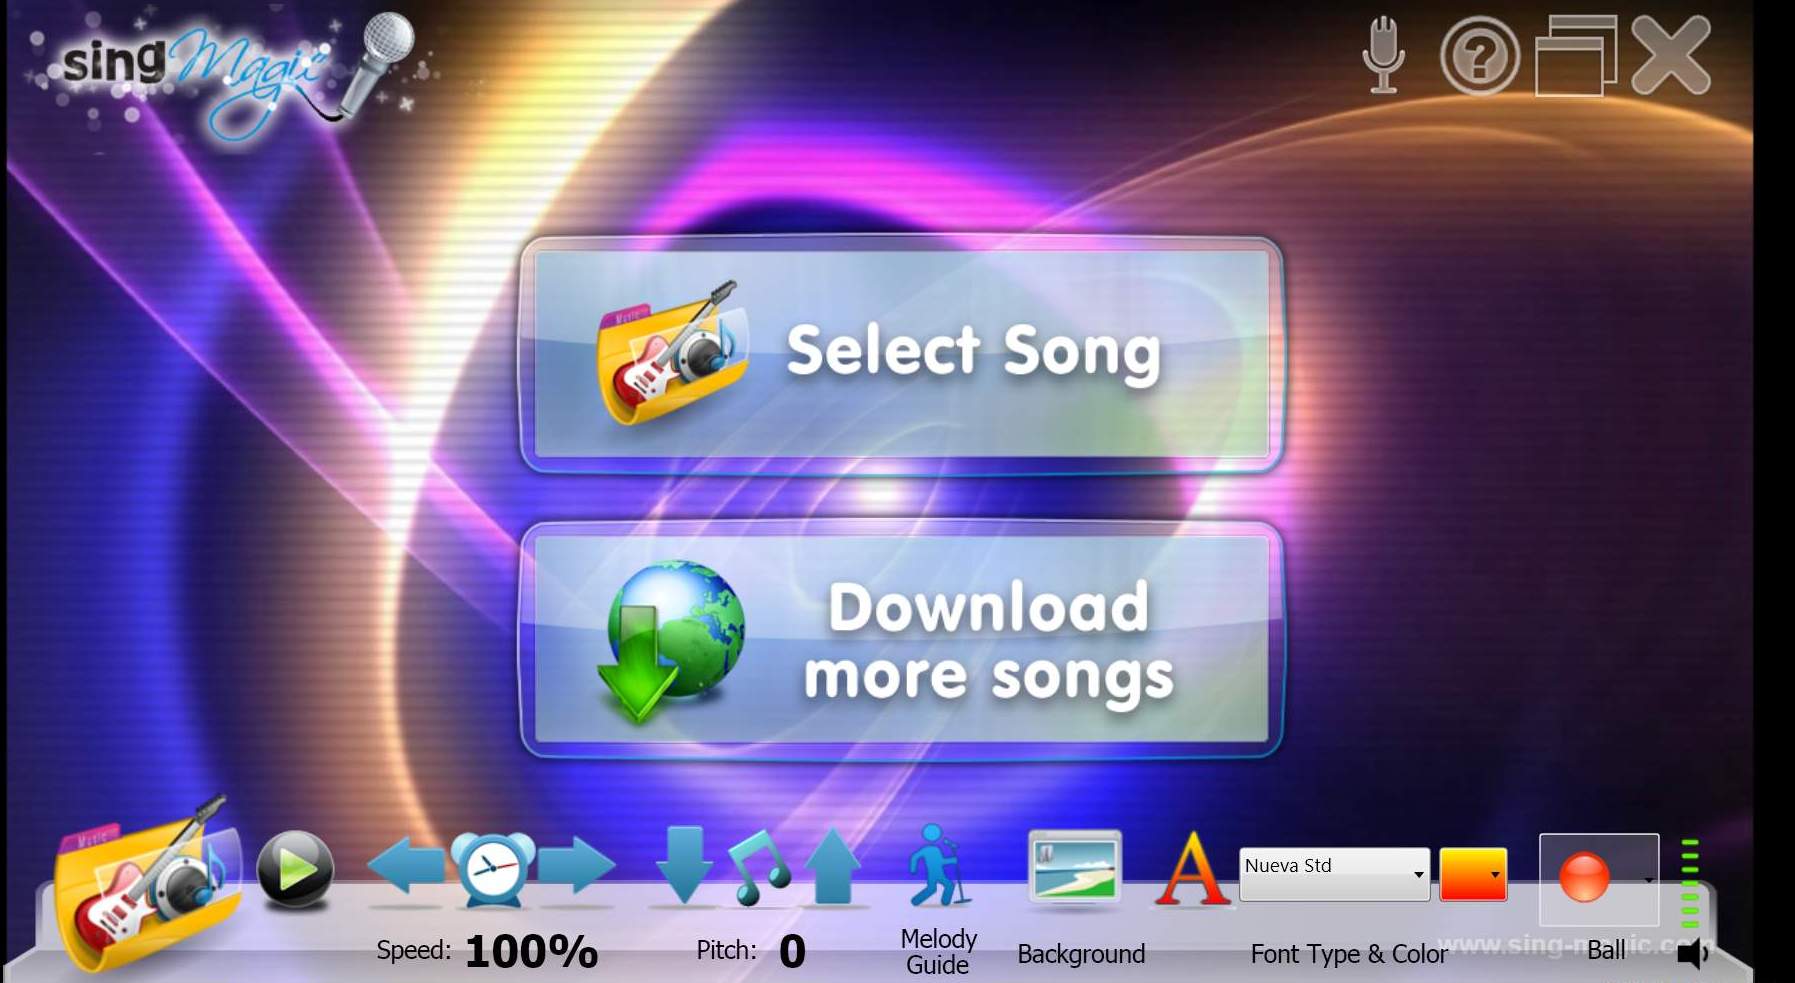 Sing-Magic Karaoke picture or screenshot